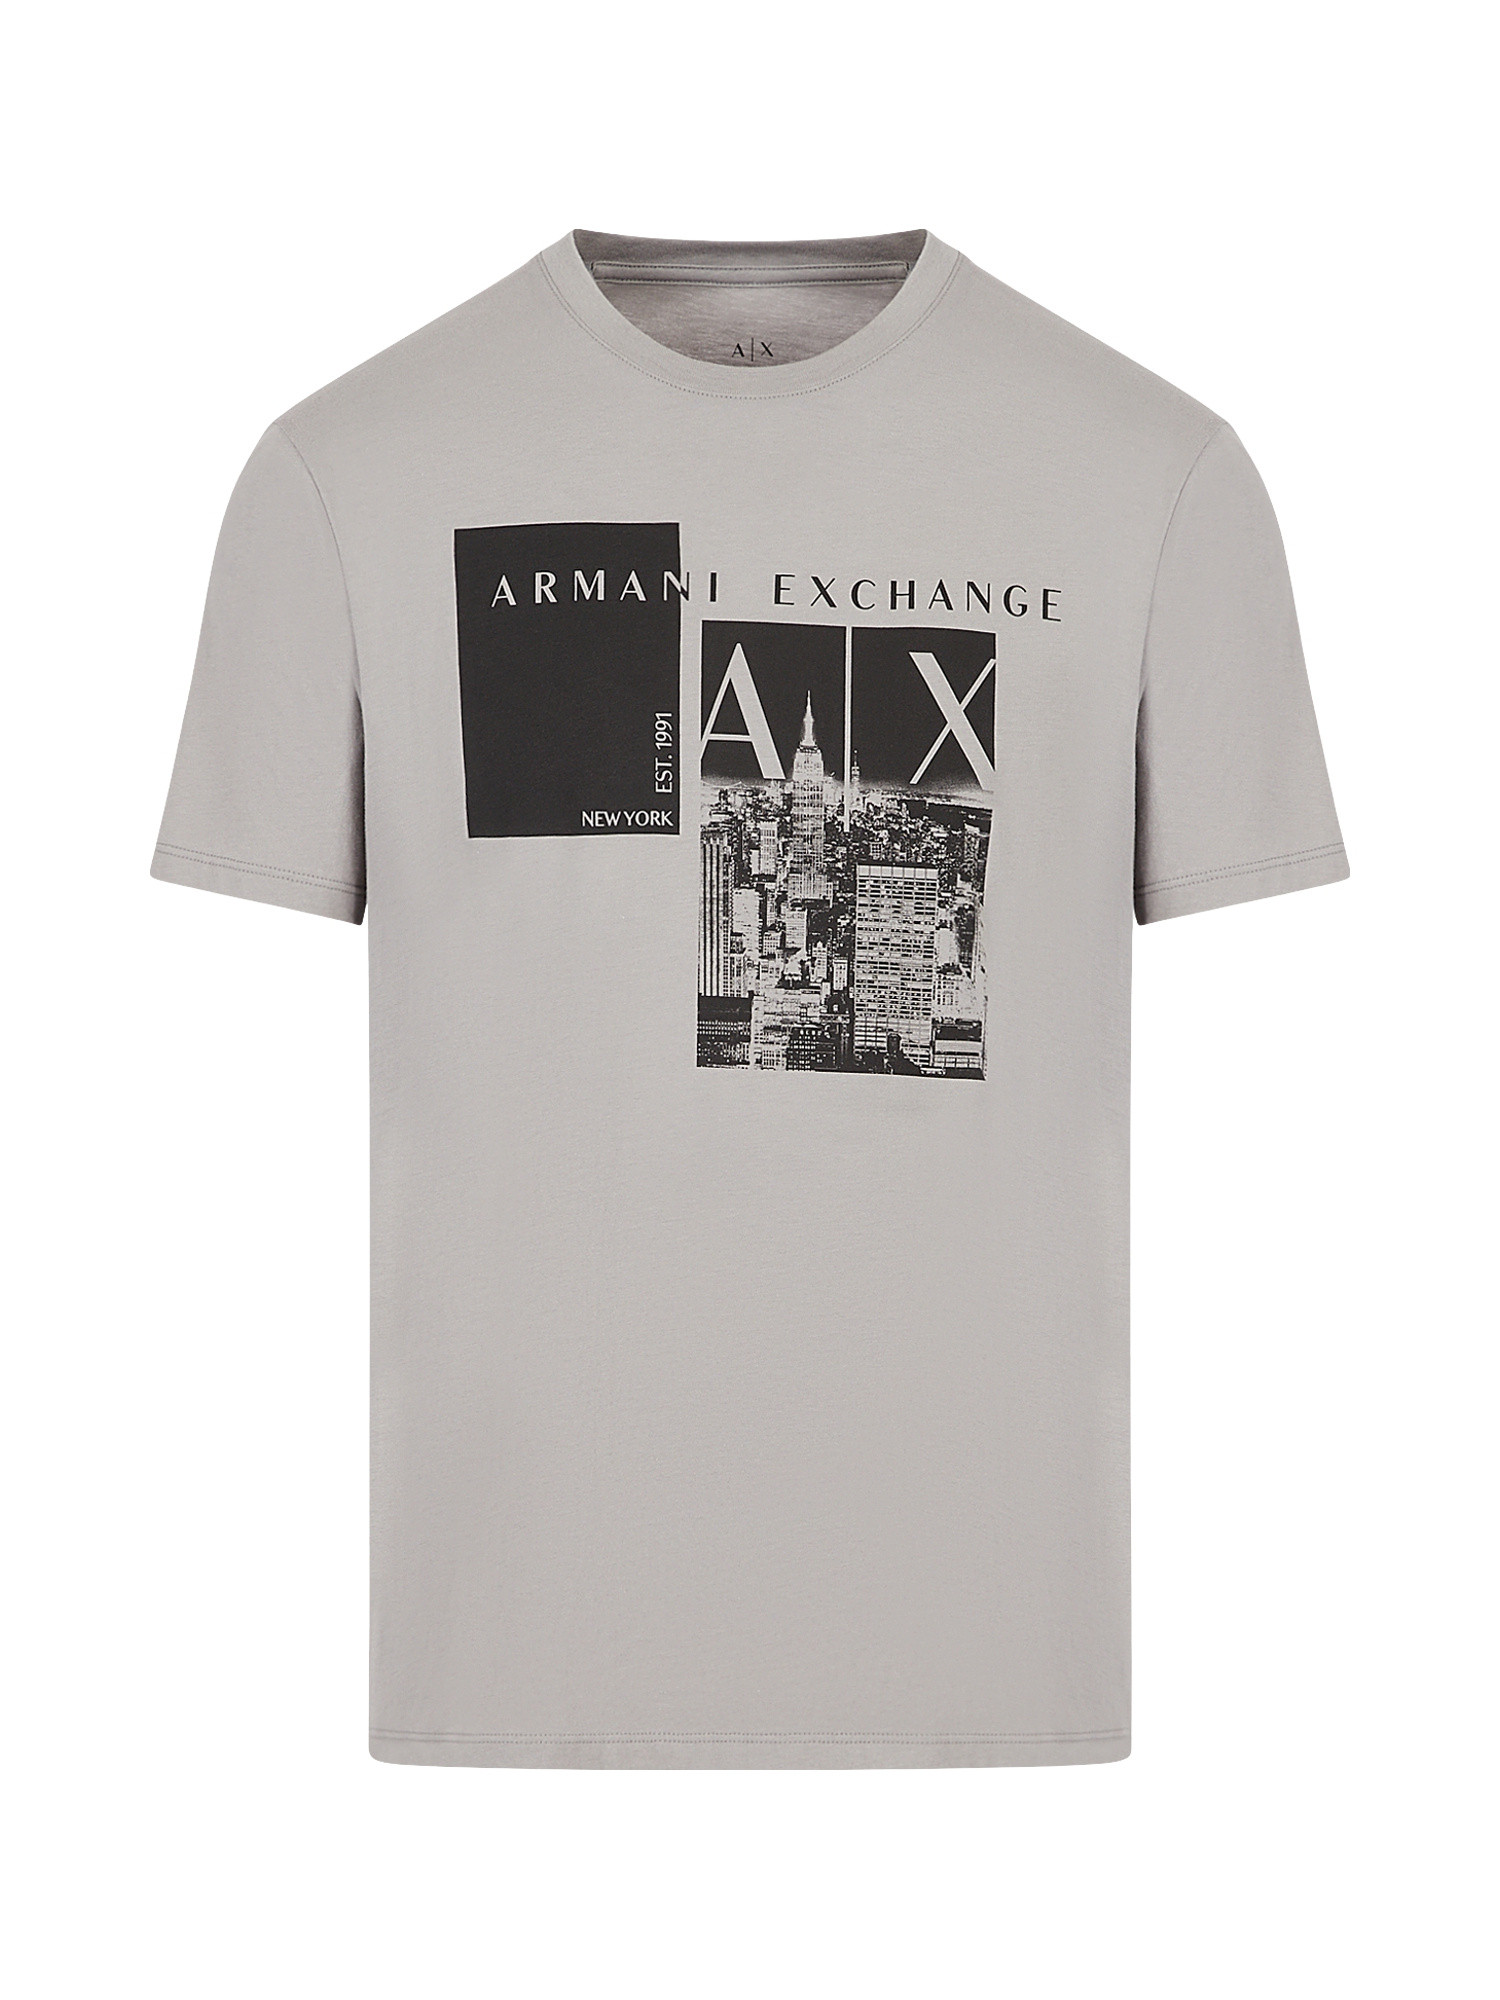 Armani Exchange - T-shirt con stampa grafica regular fit, Grigio scuro, large image number 0